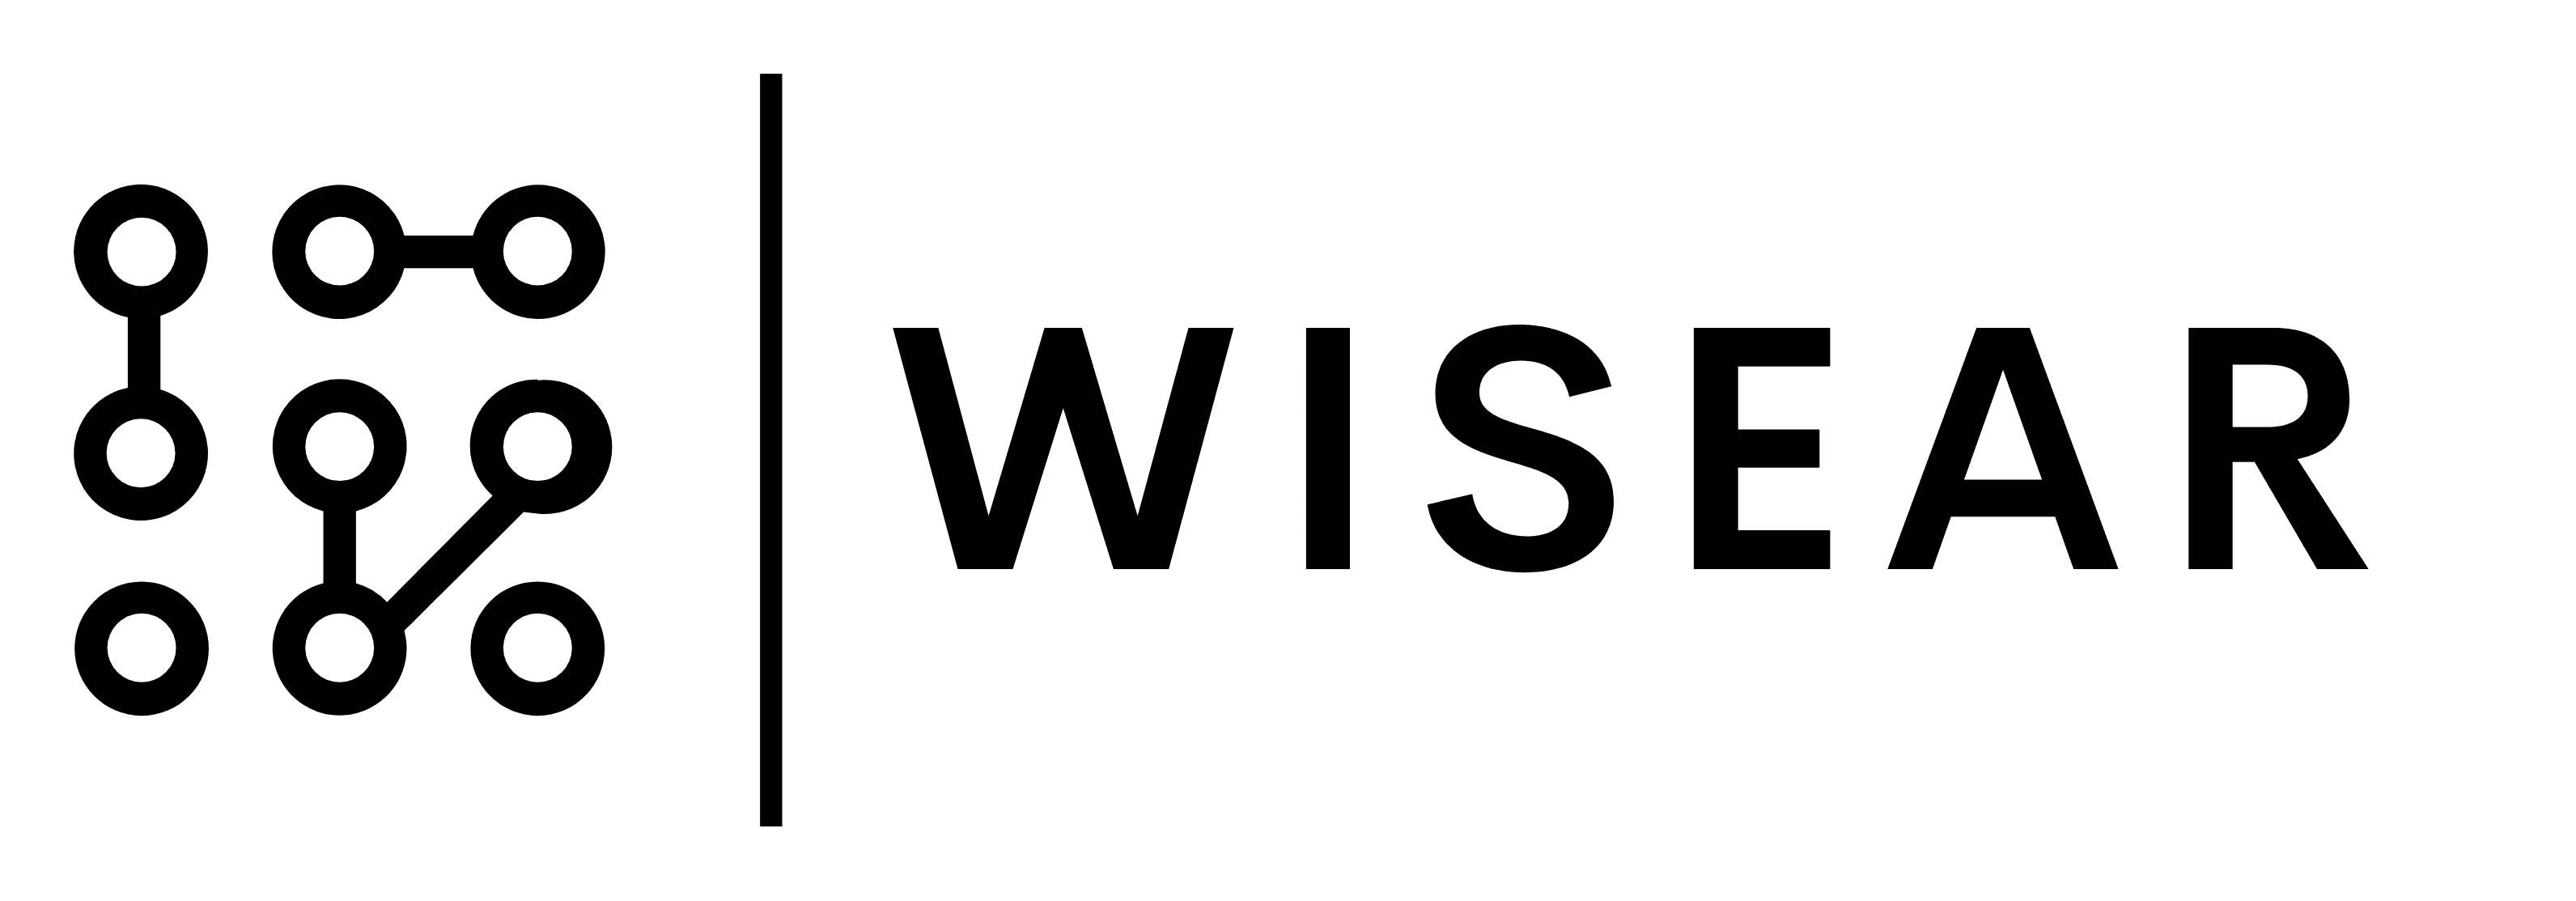 WISEAR | 2021 | Digital